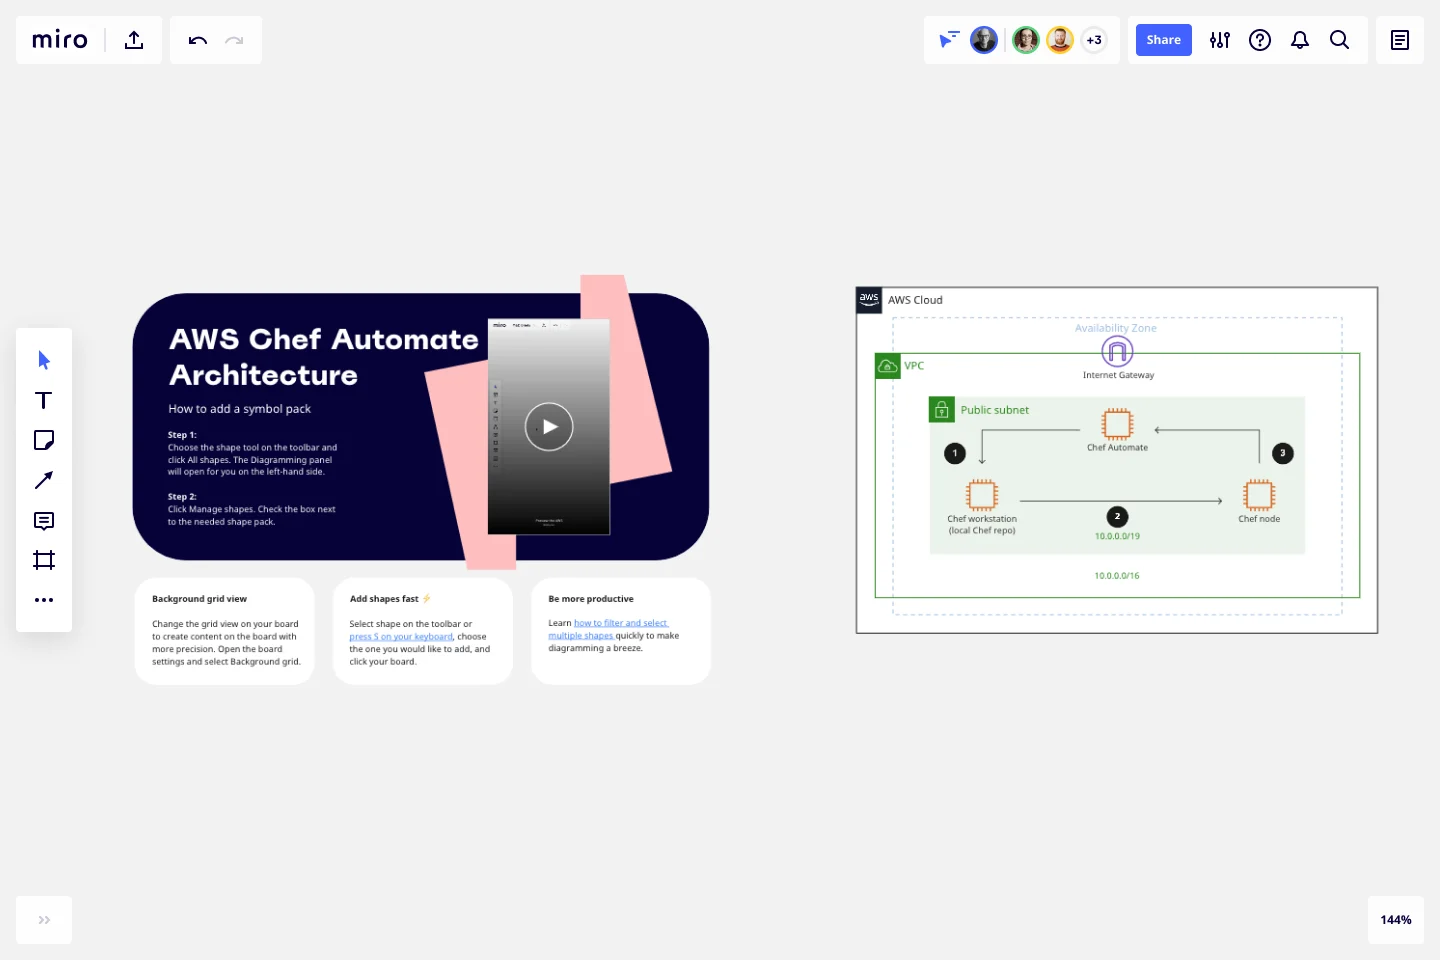 aws-chef-automate-architecture-web